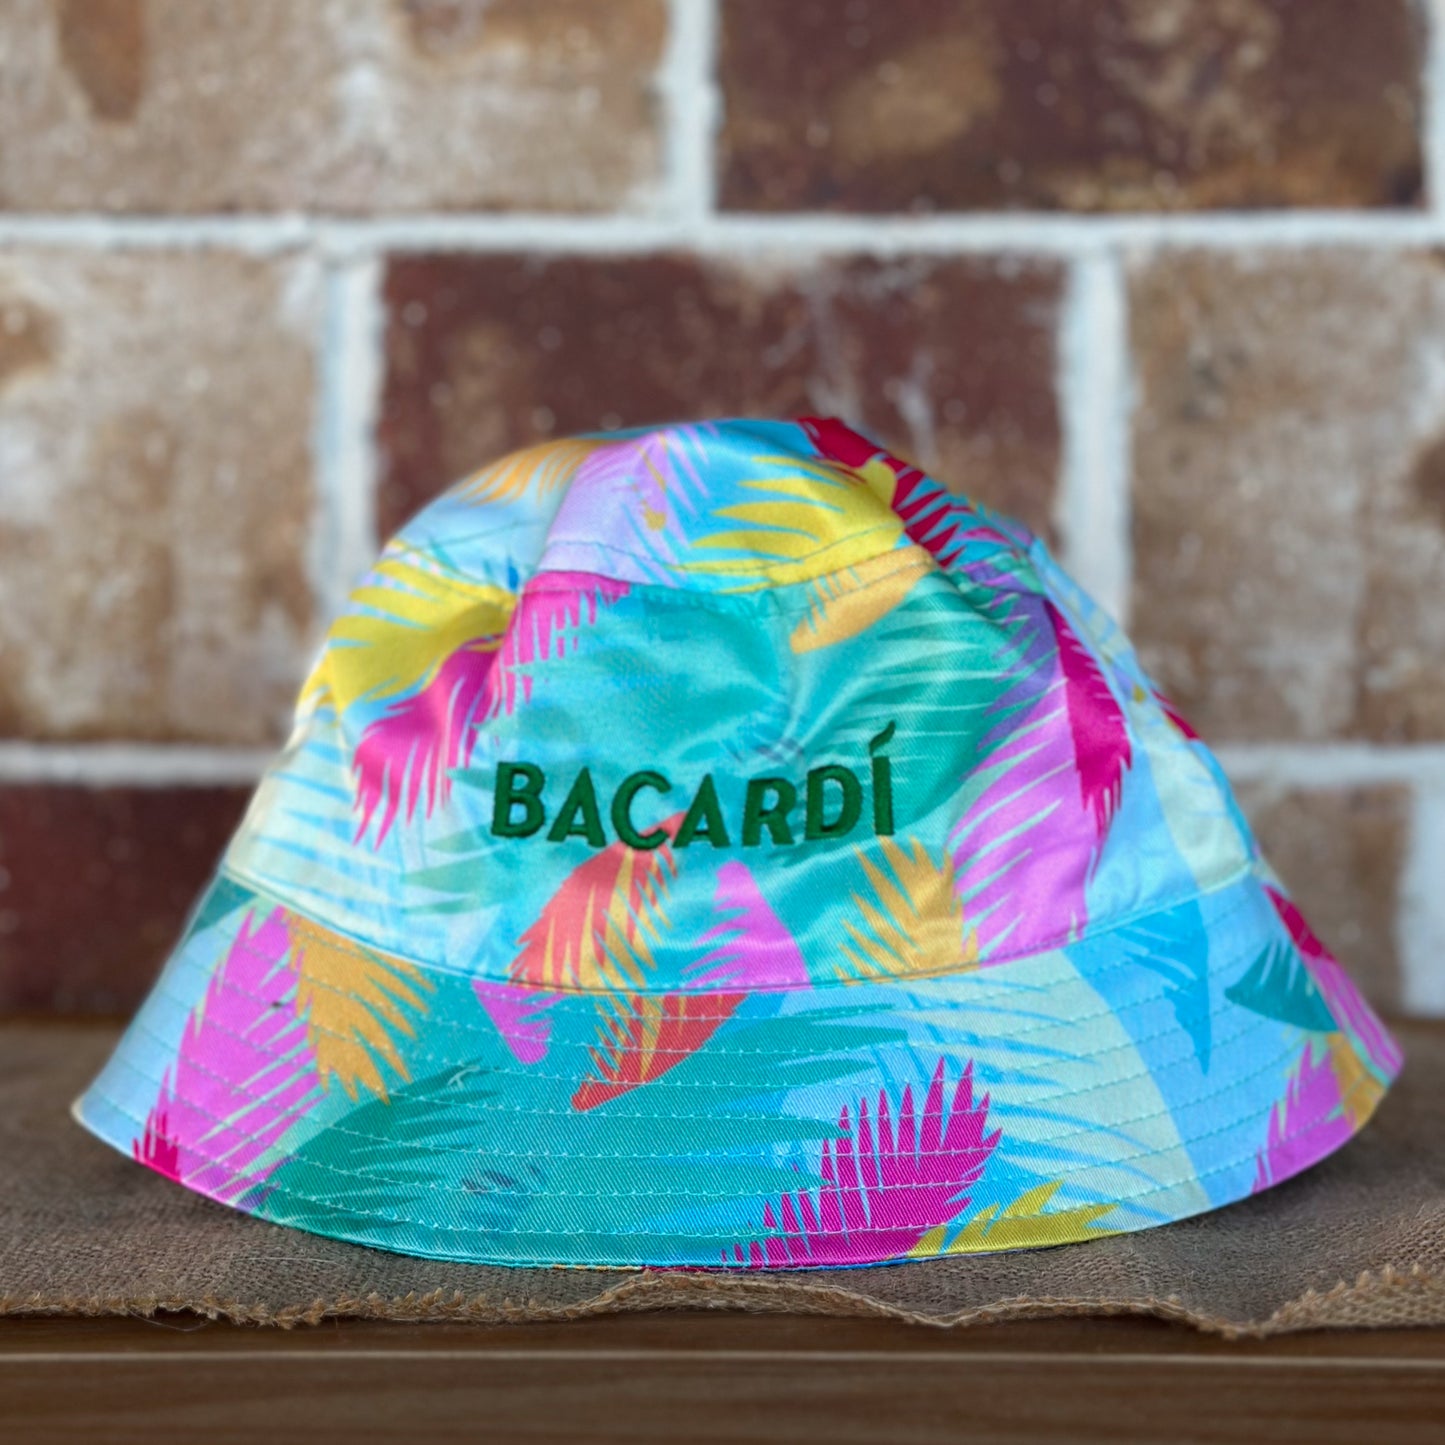 Bacardi Rum Bucket Hat